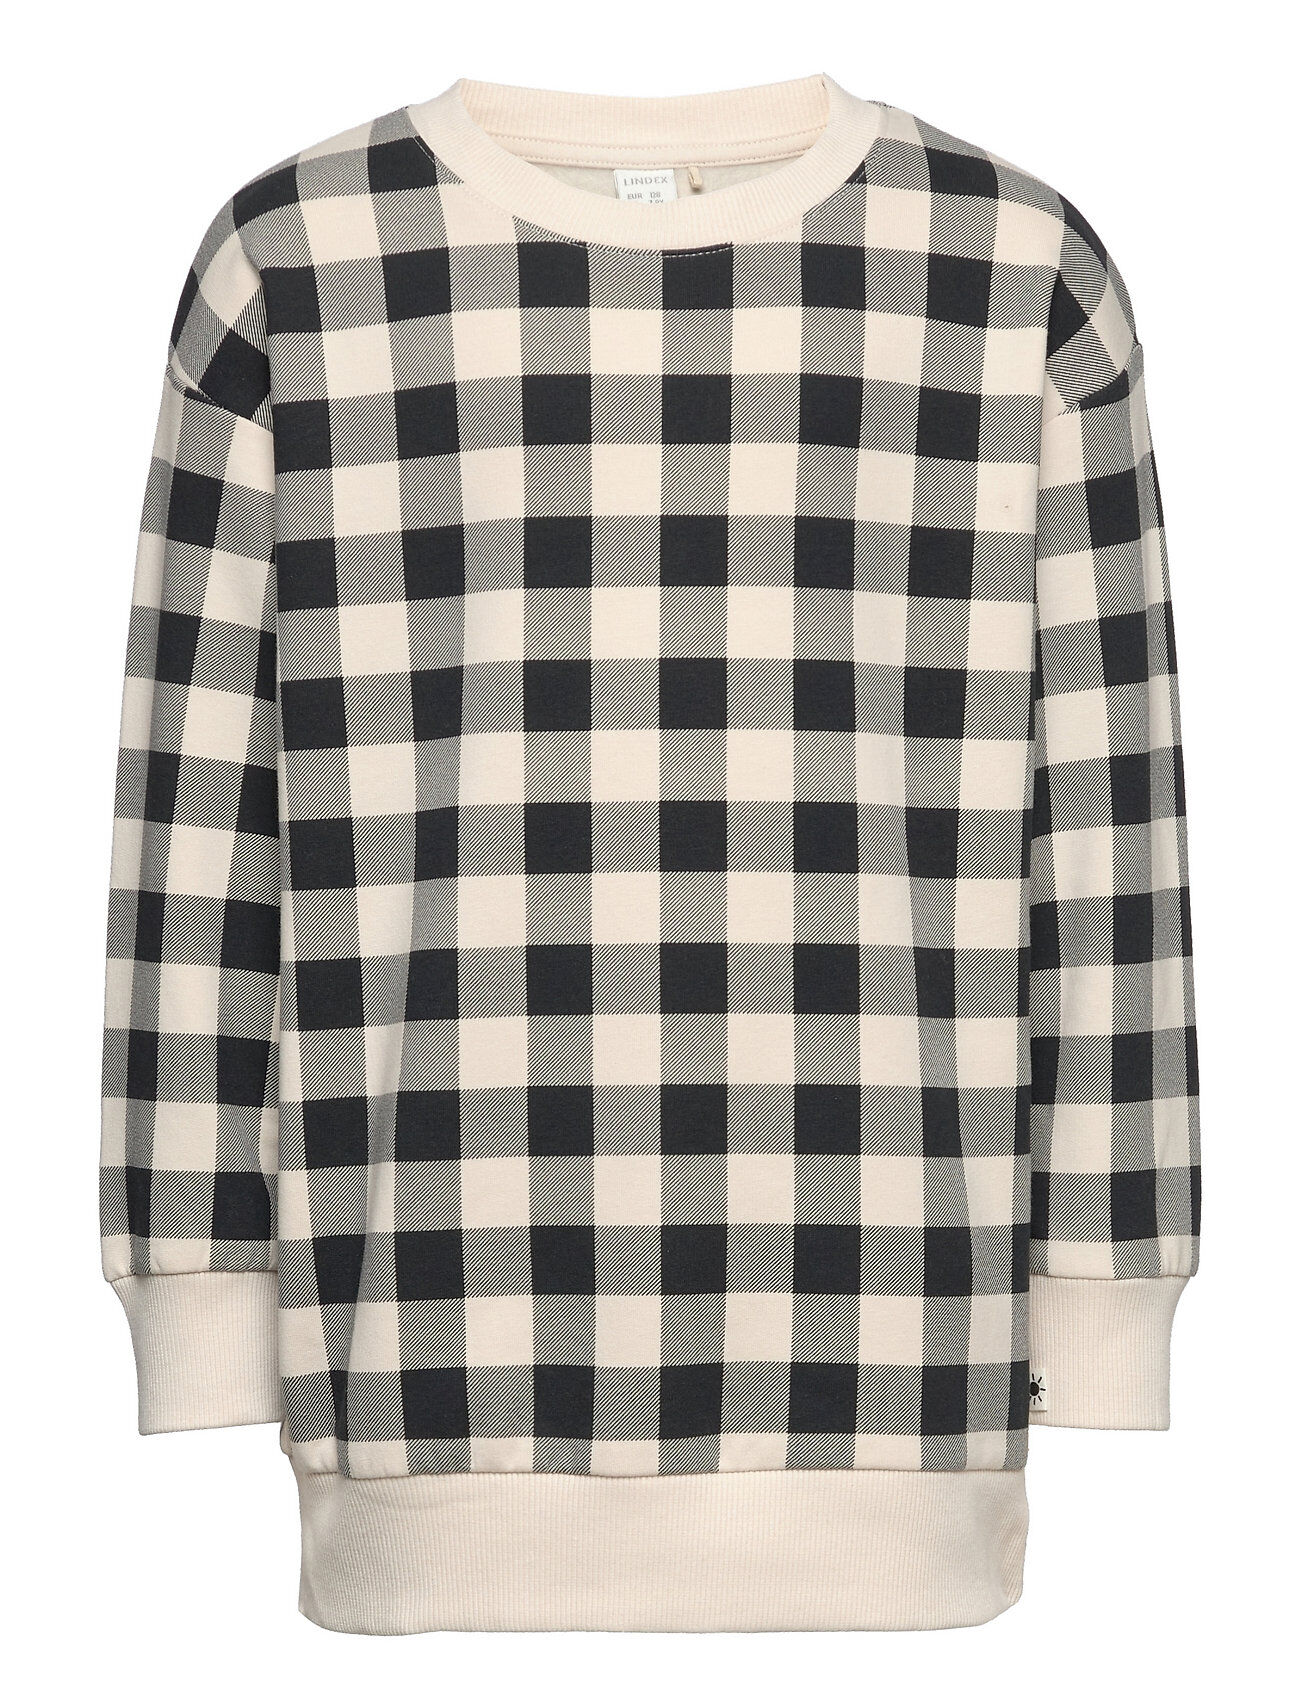 Lindex Sweatshirt Check Aop X Long Fi Sweat-shirt Genser Multi/mønstret Lindex